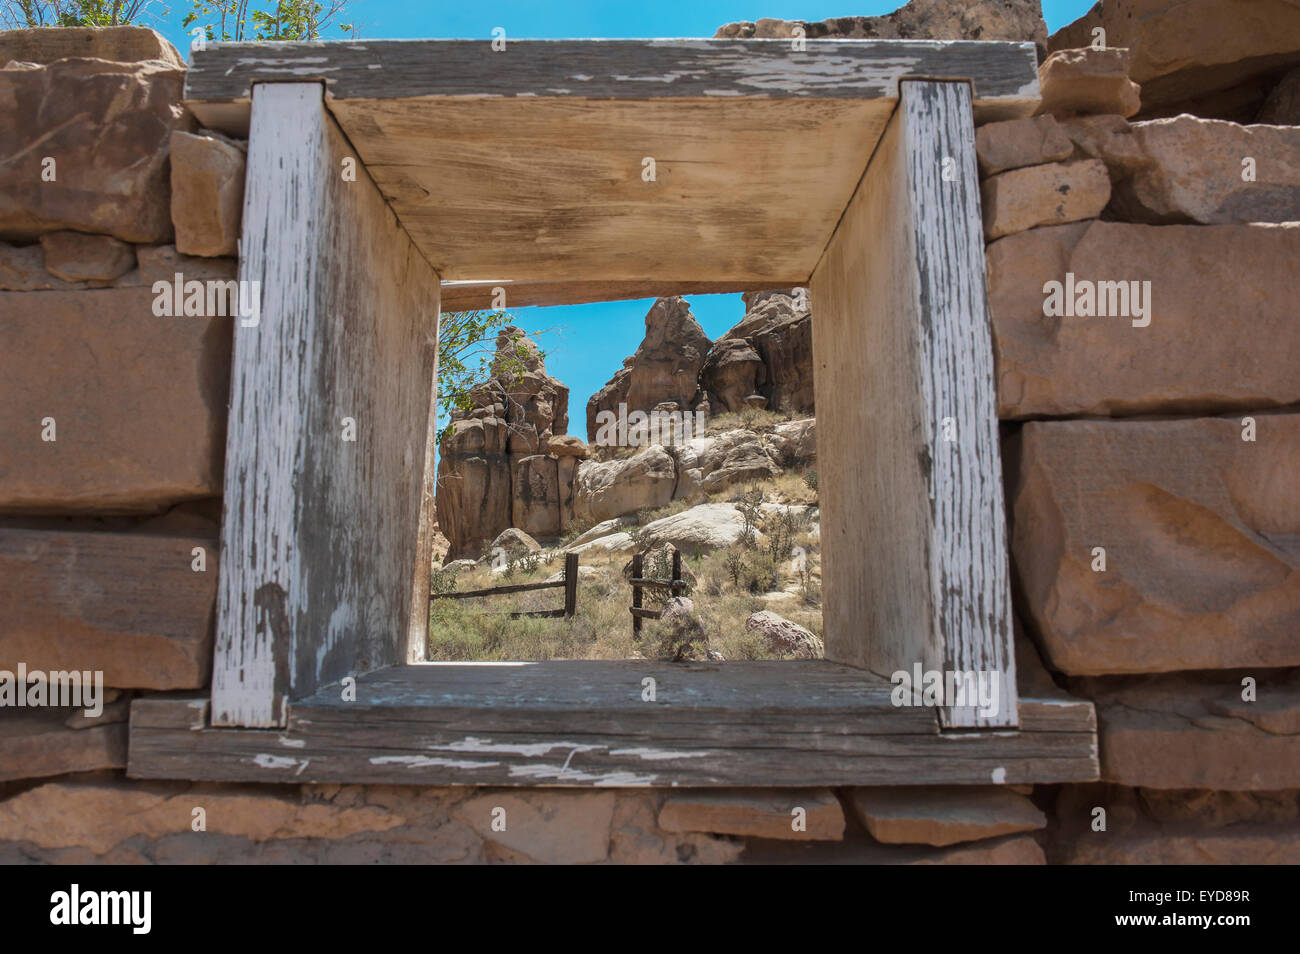 The Acoma Pueblo Built On Top Of A Sandstone Mesa, Pueblo Of Acoma, New Mexico, Usa Stock Photo